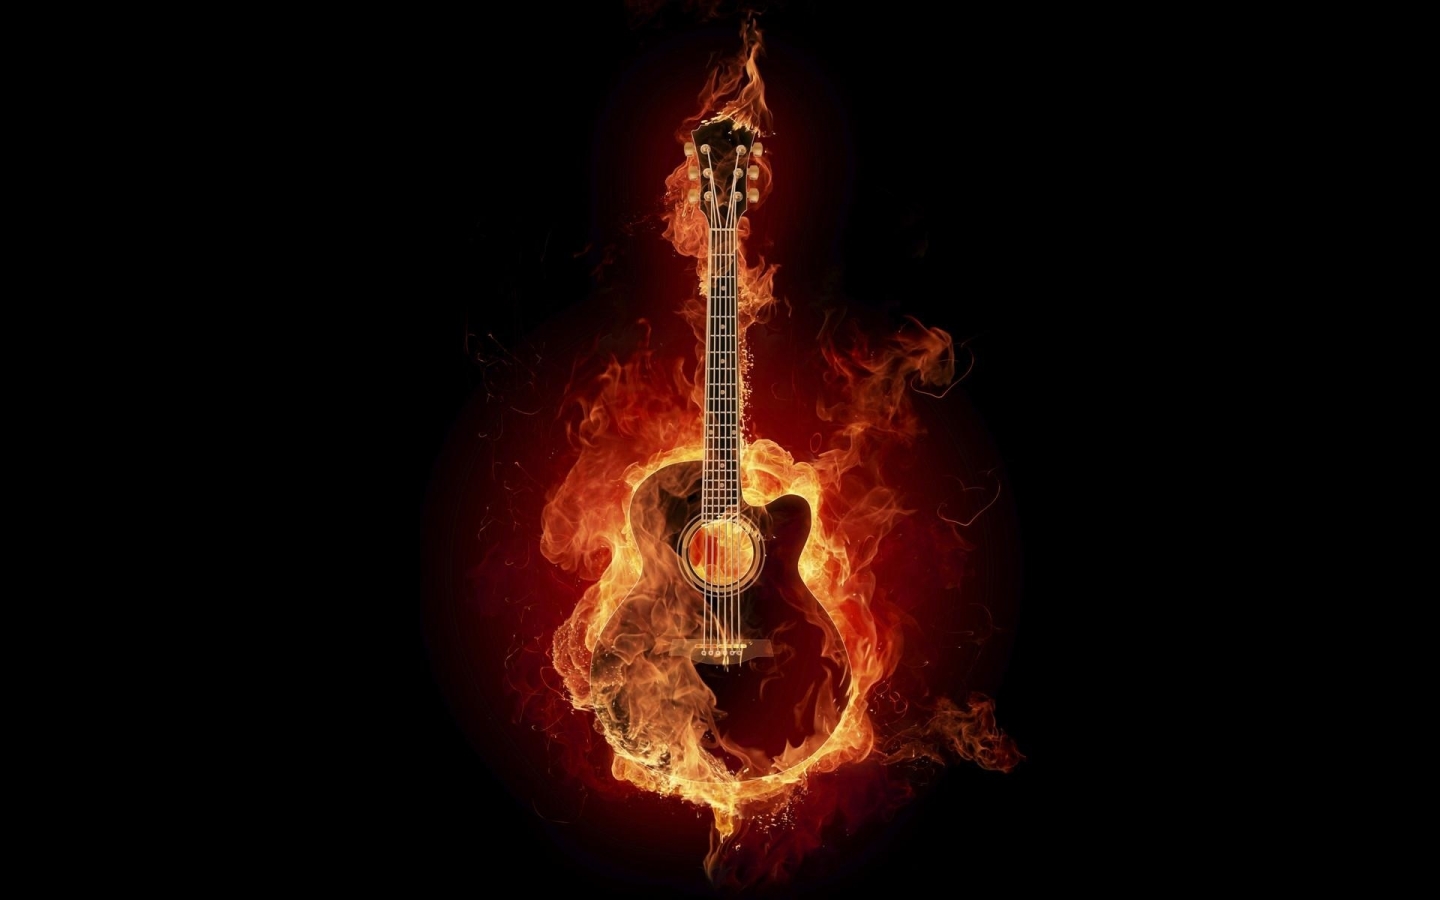 Great Fire Guitar for 1440 x 900 widescreen resolution